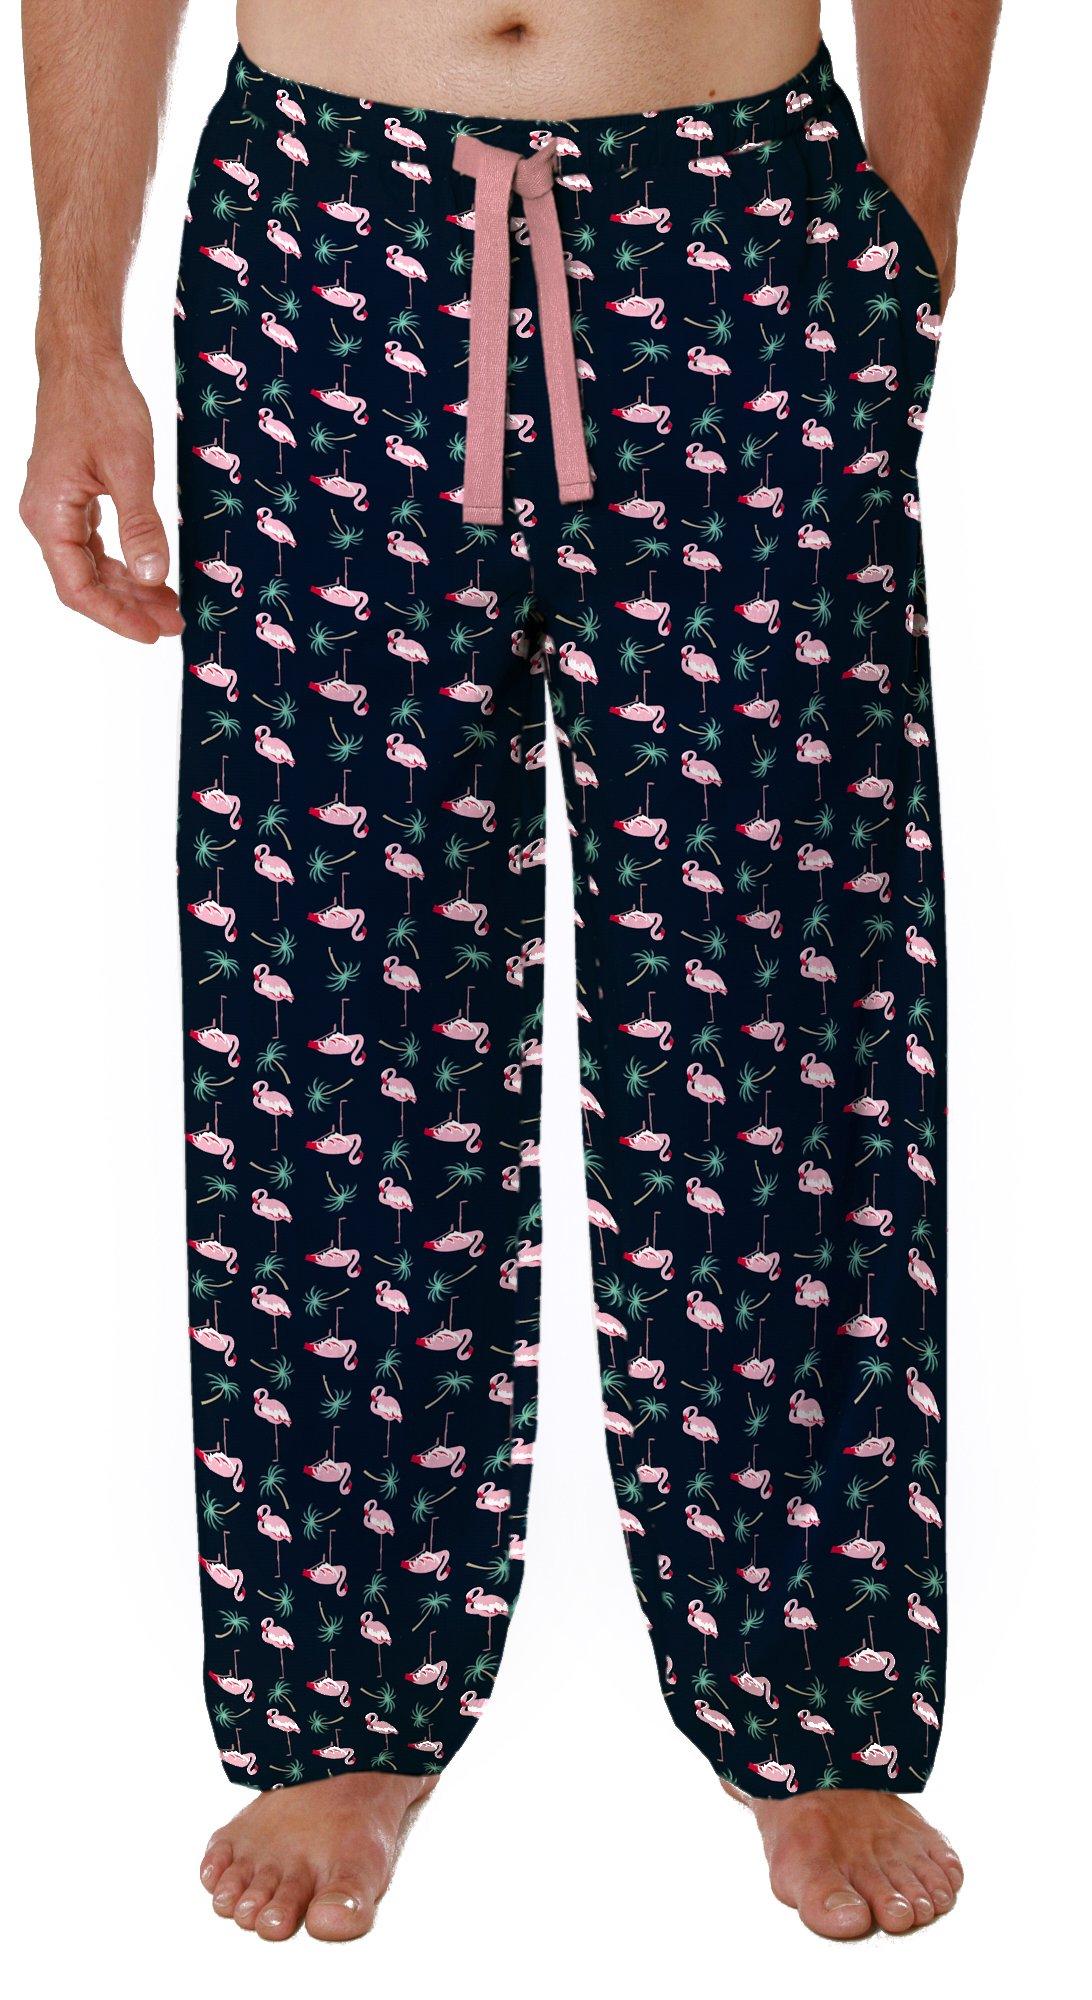 Adult size XL Tropical flamingo PJ pants